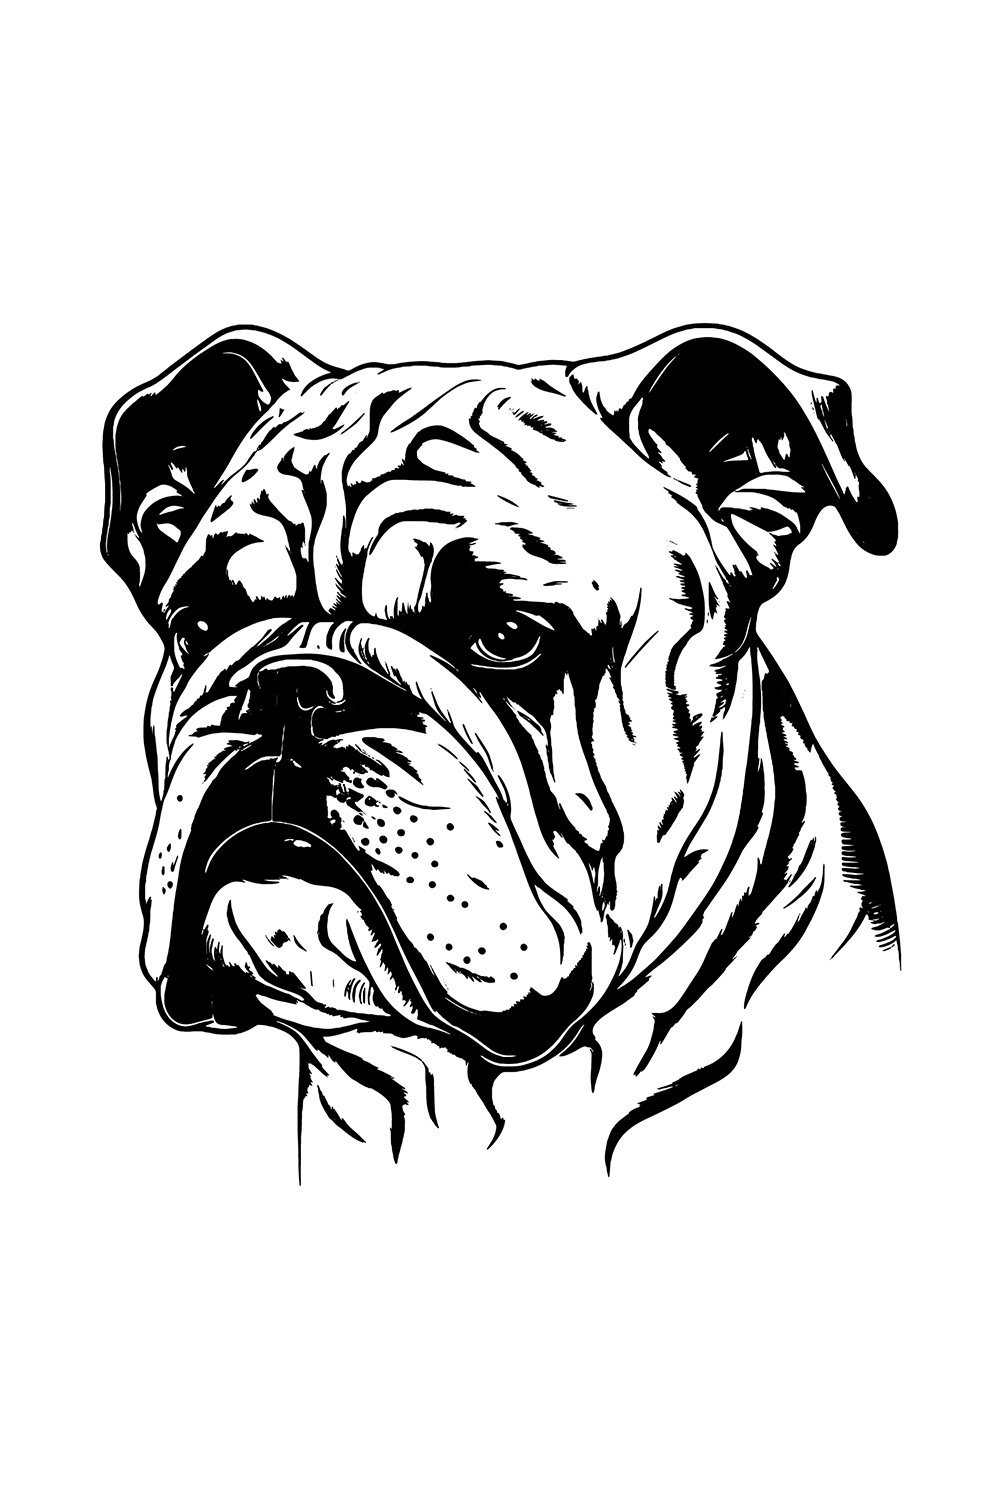 A Bulldog logo Illustration pinterest preview image.